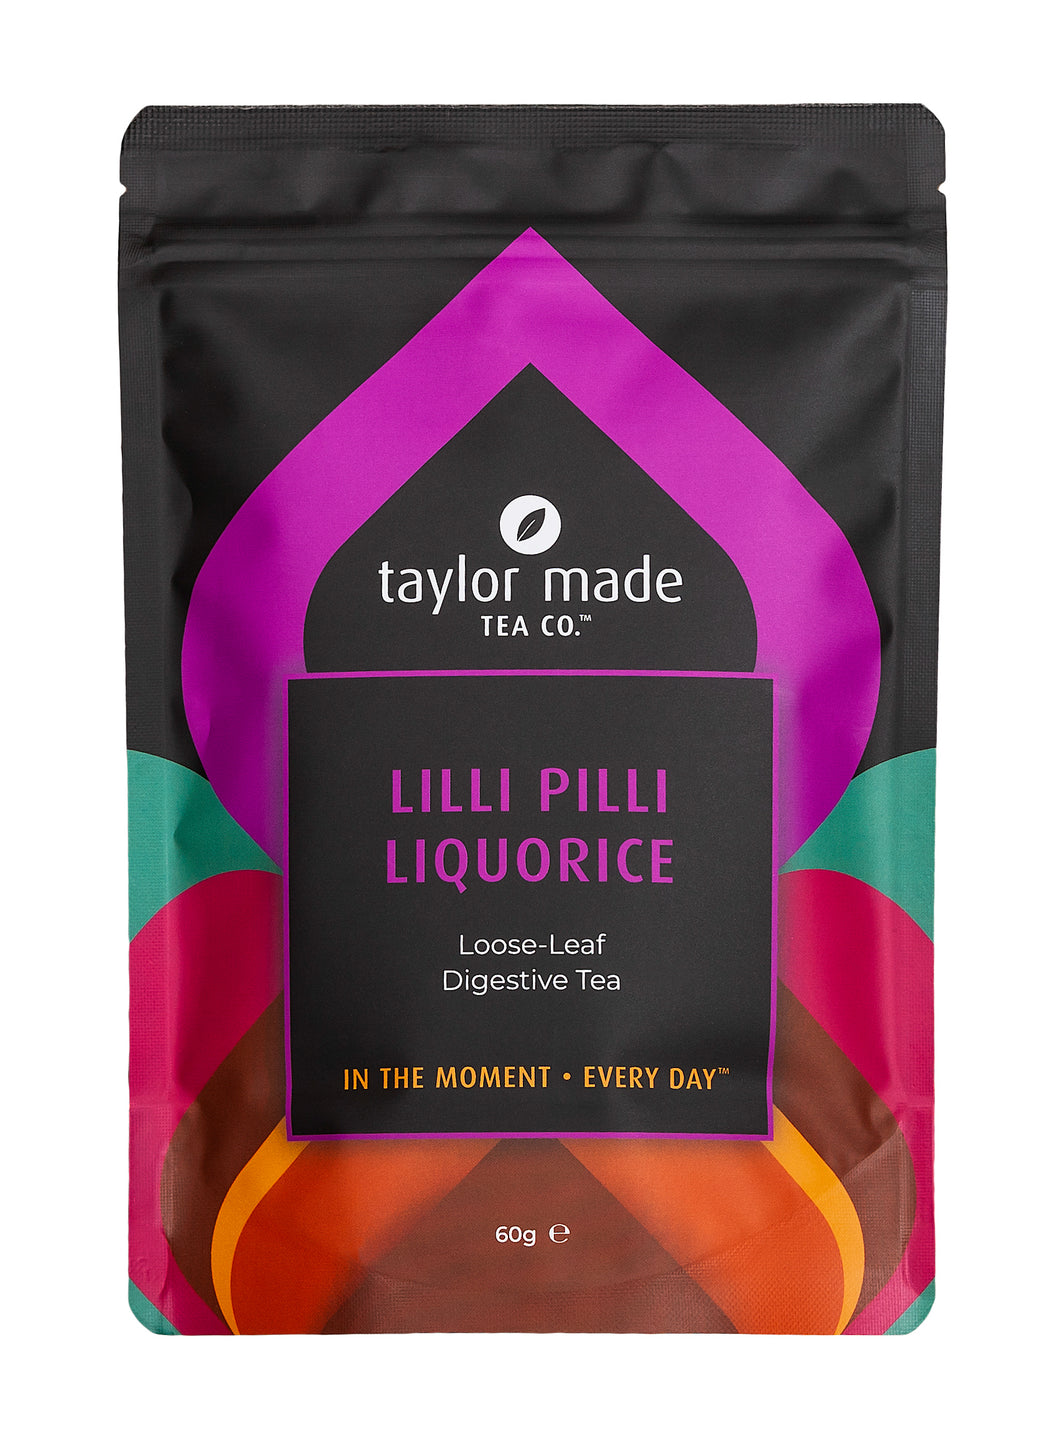 Lilli Pilli Liquorice organic loose leaf digestive tea pouch. Purple pouch design scheme. 60g pack. 